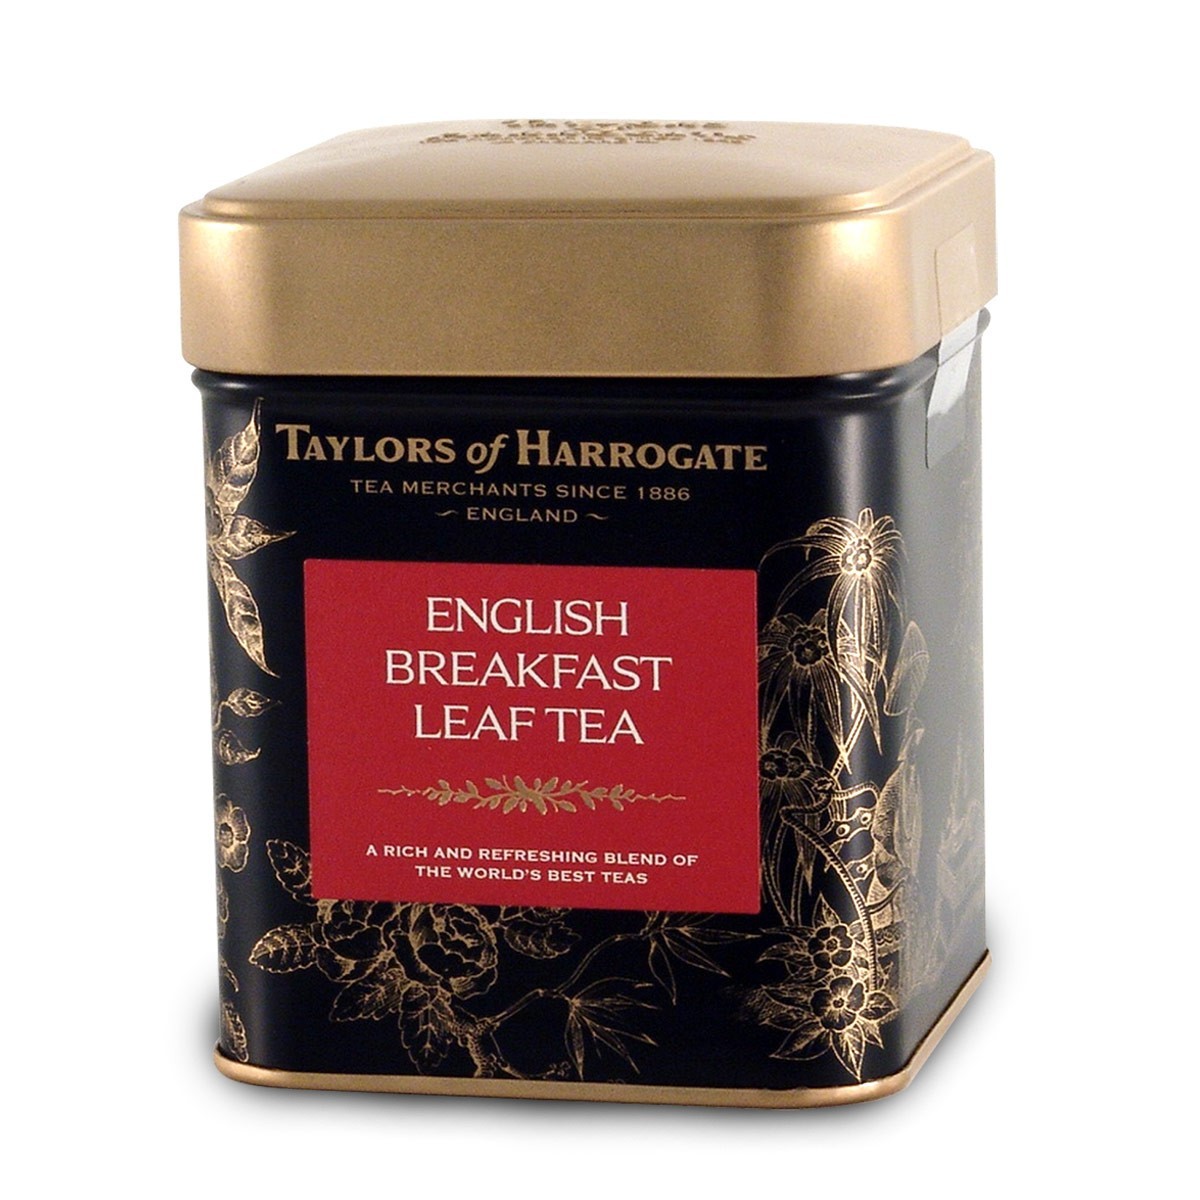 vendita online tè inglesi in foglie taylors of harrogate english breakfast  tea shop on line te inglese classico da colazione sfu